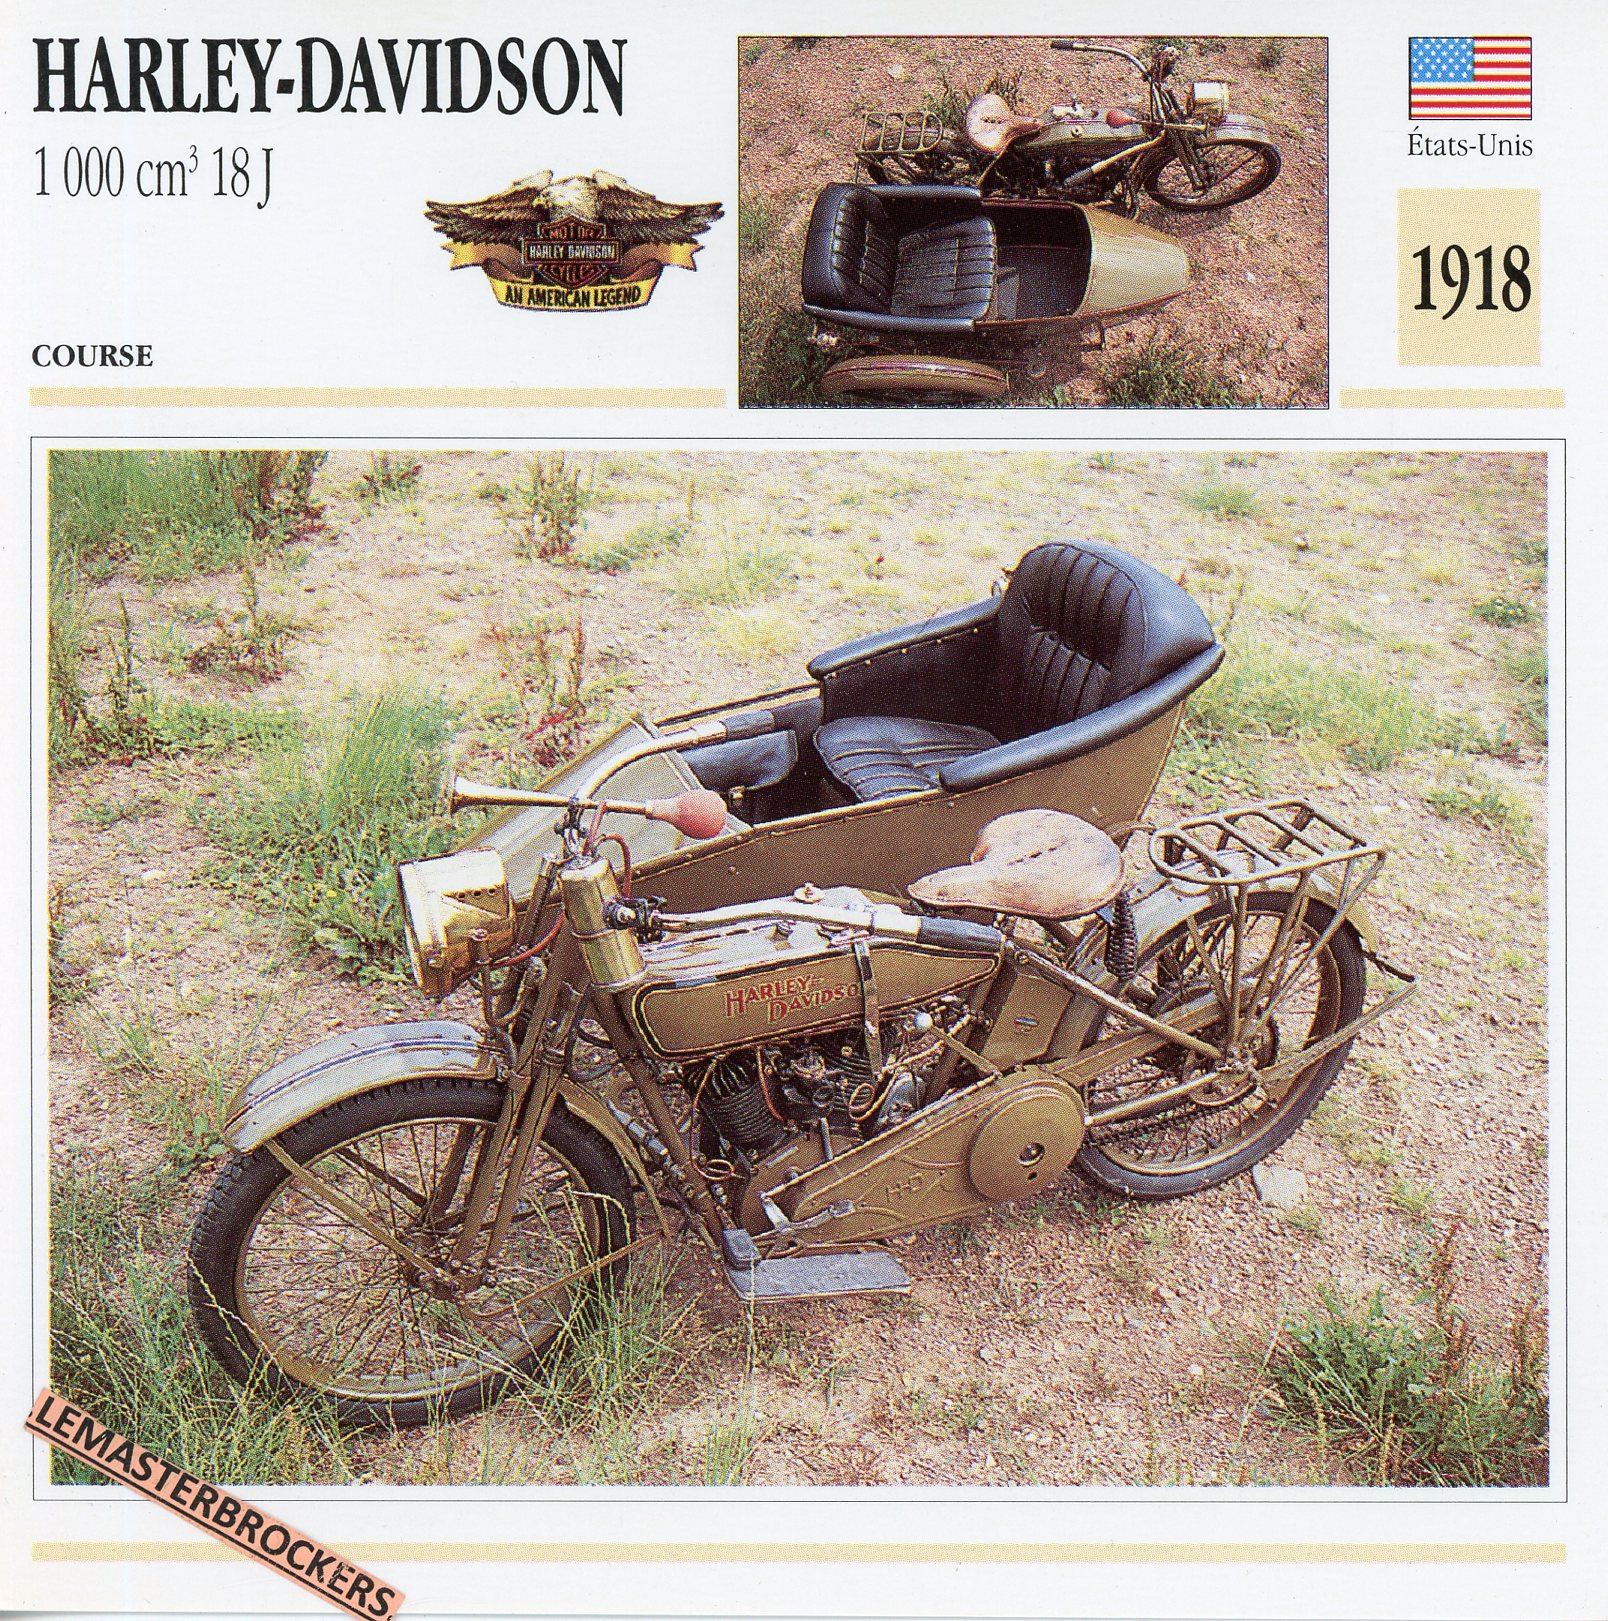 HARLEY-DAVIDSON-1000CC-18J-1918-LEMASTERBROCKERS-FICHE-MOTO-ATLAS-SIDE-CAR-COLLECTION-CARD